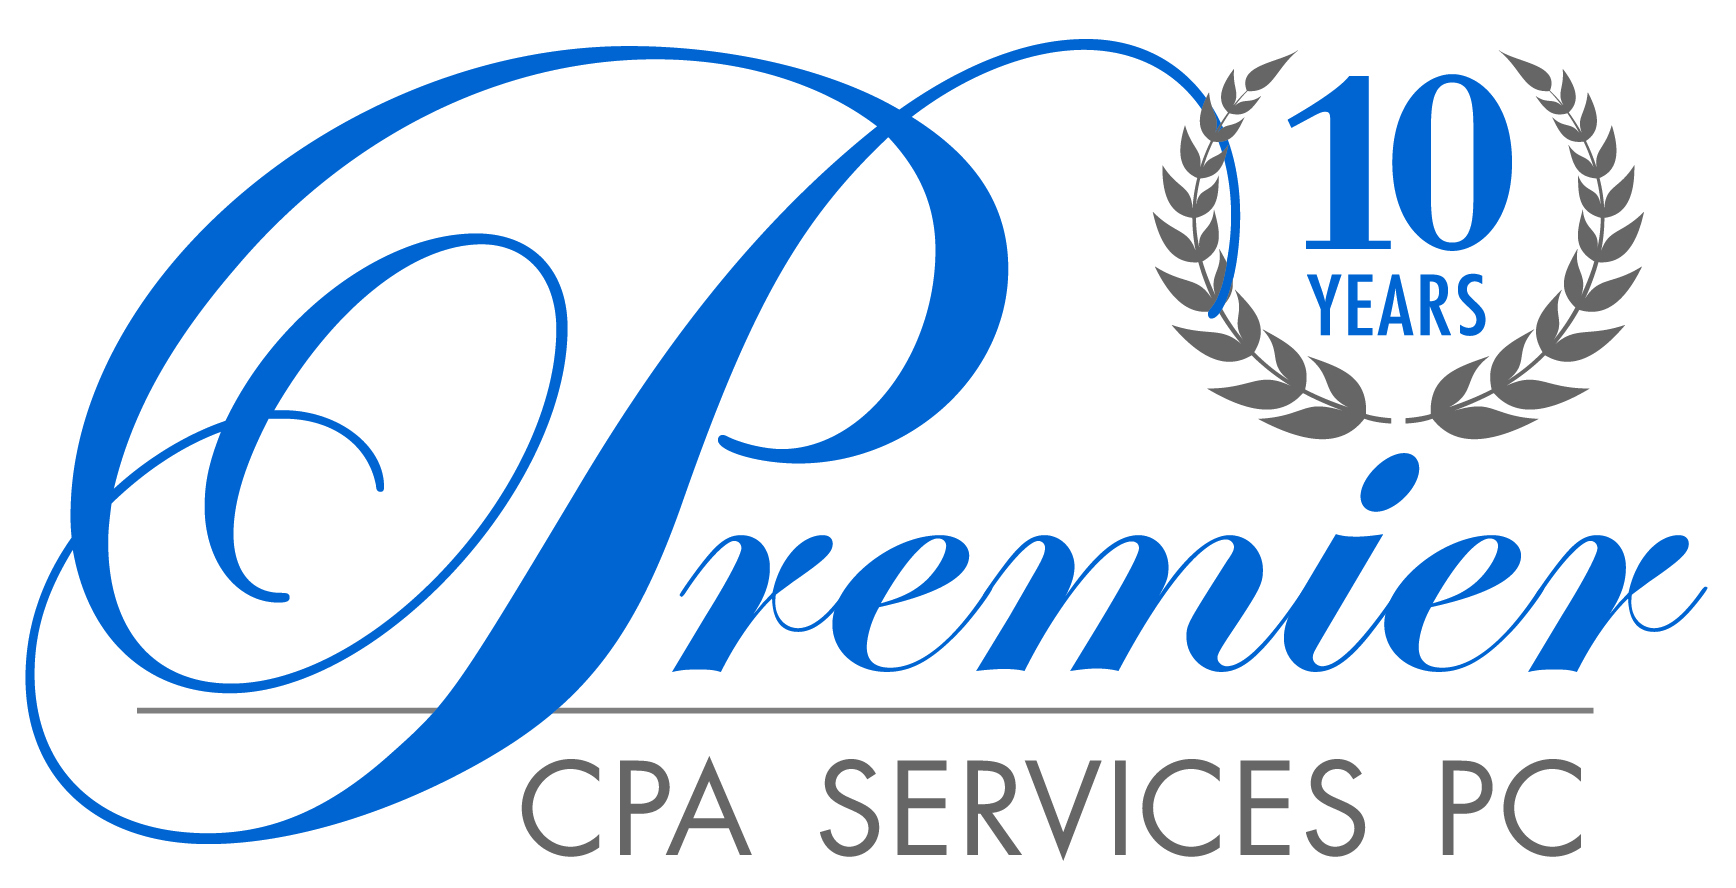 Premier CPA Services 10 year anniversary logo